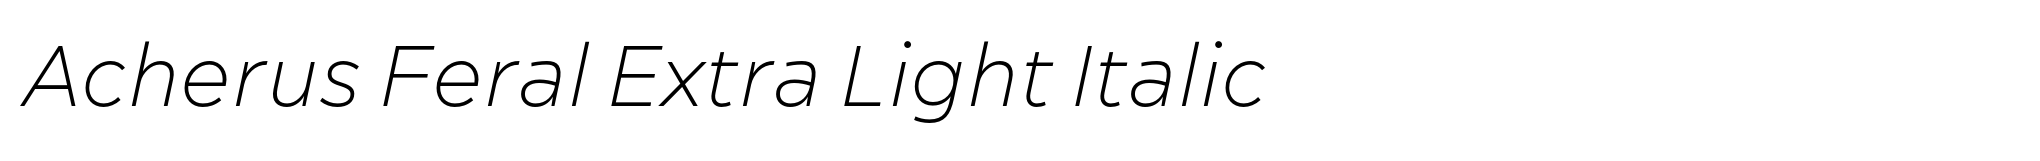 Acherus Feral Extra Light Italic image